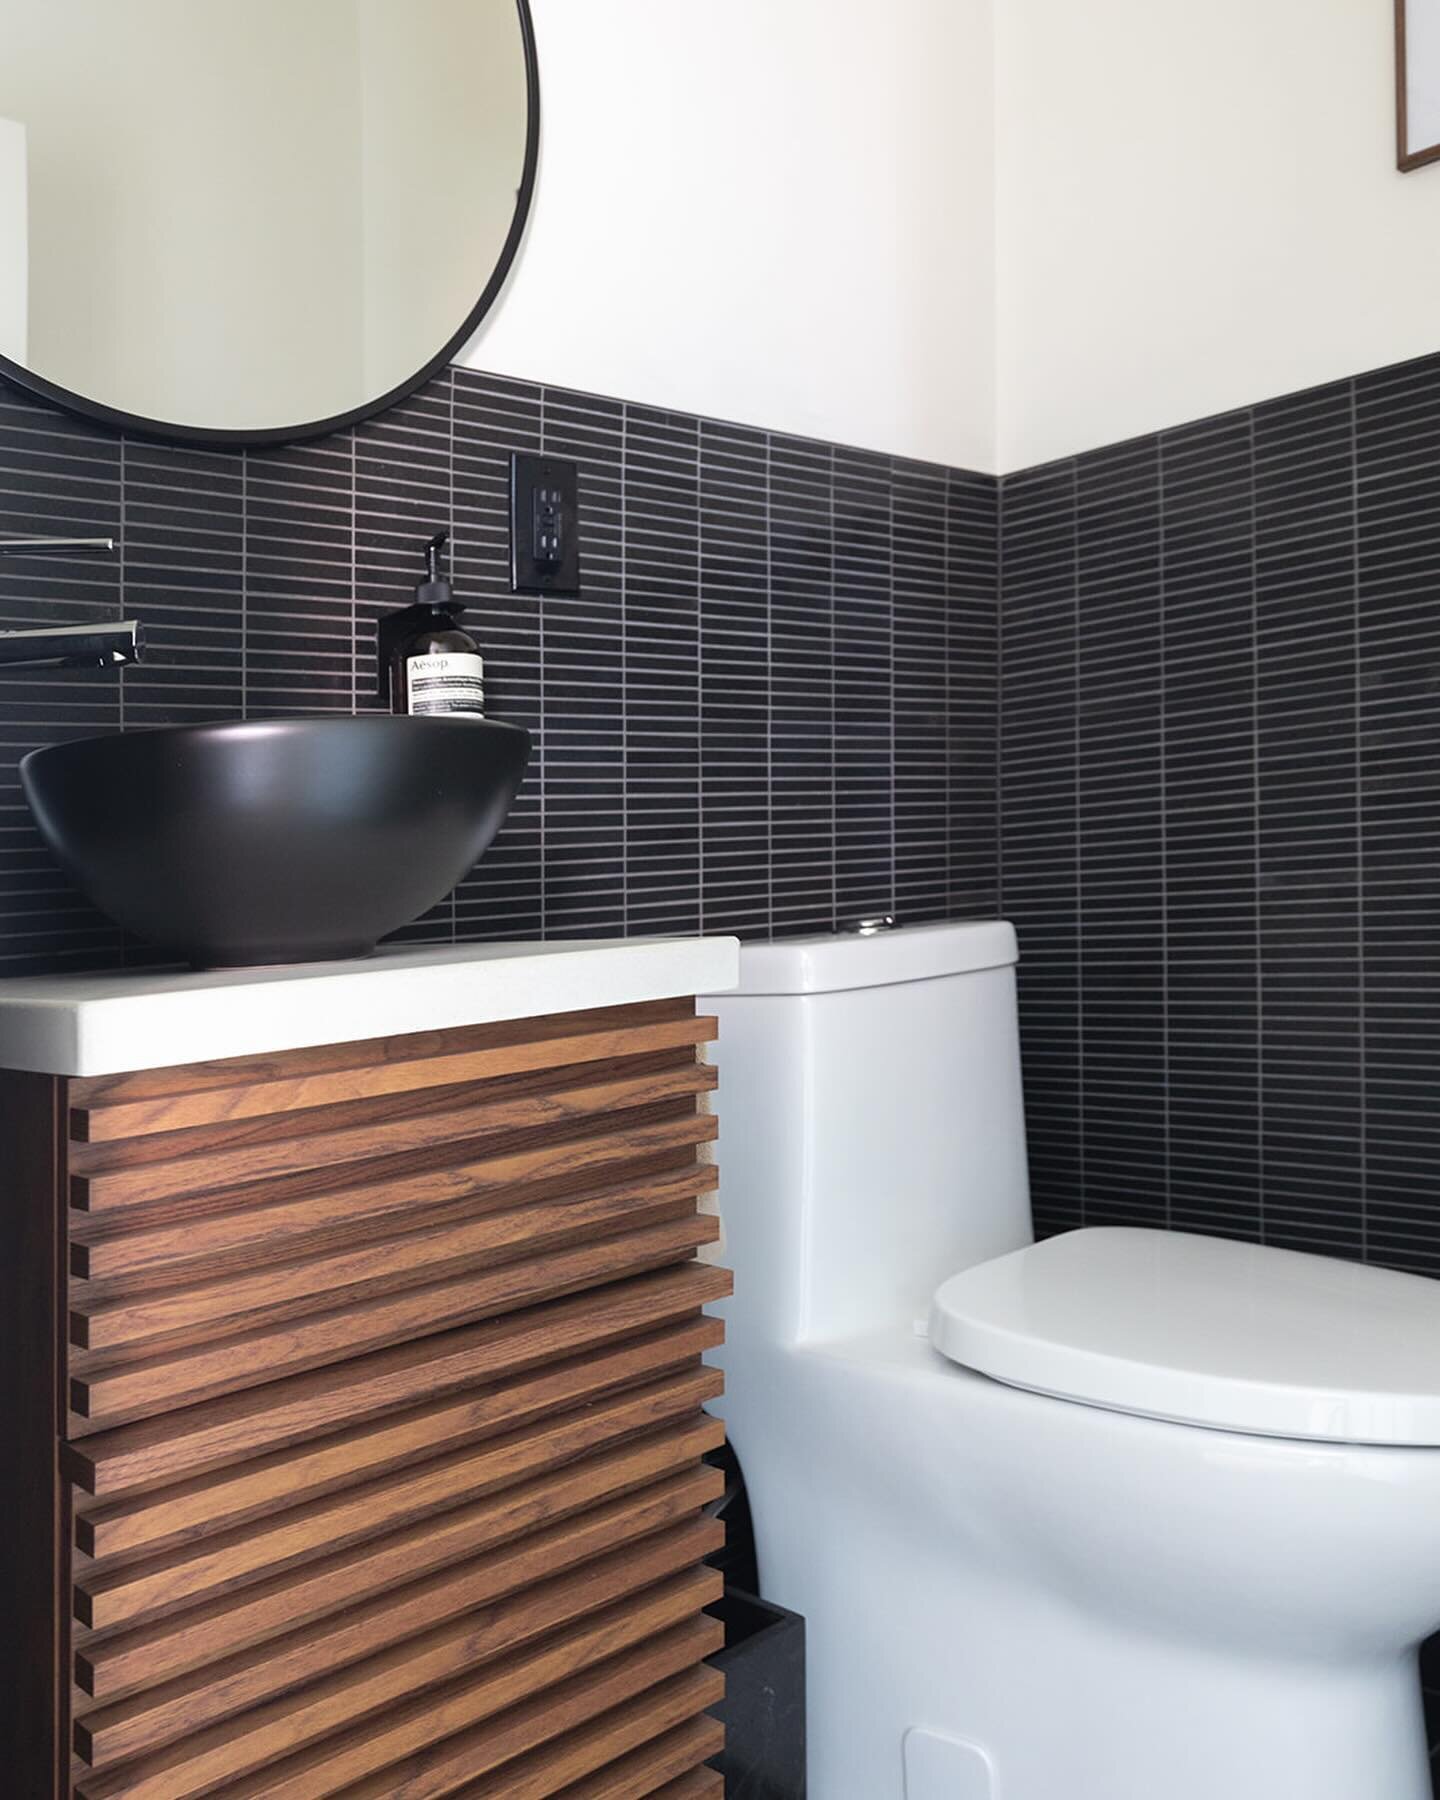 Half bath // full reno.
.
.
.
📸: @ramseybakerinteriors

#columbusohio #architecture #interiordesign #homedecor #interior #bathroomdesign #bathroomremodel #bathroominspiration #homedesign #interiordesigner #interiorstyling #bathroominspo #interiorsty